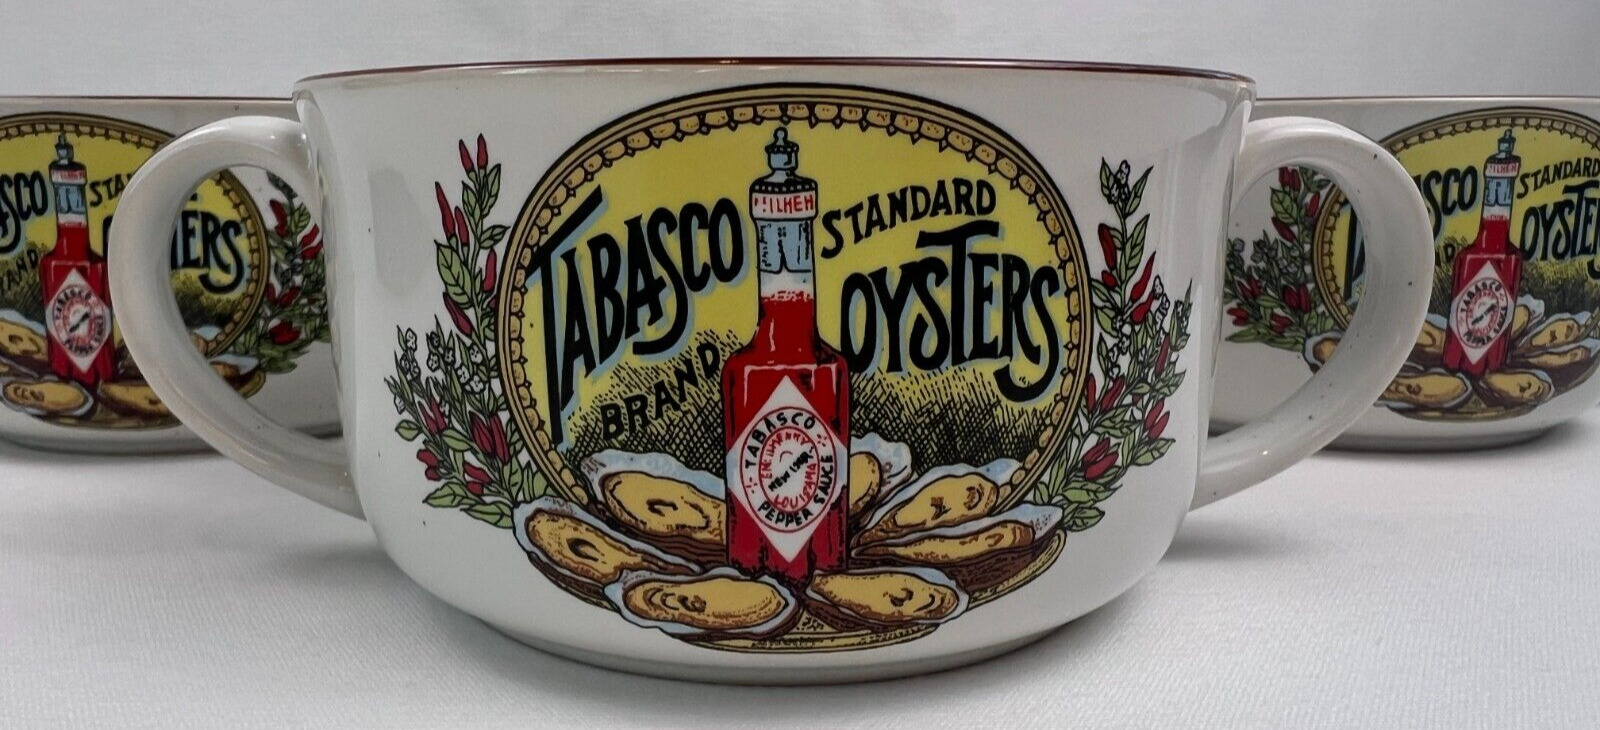 NIB Set of 4Tabasco Brand Oyster Bowl Cup Louisiana Soup Mug Gumbo Jambalaya